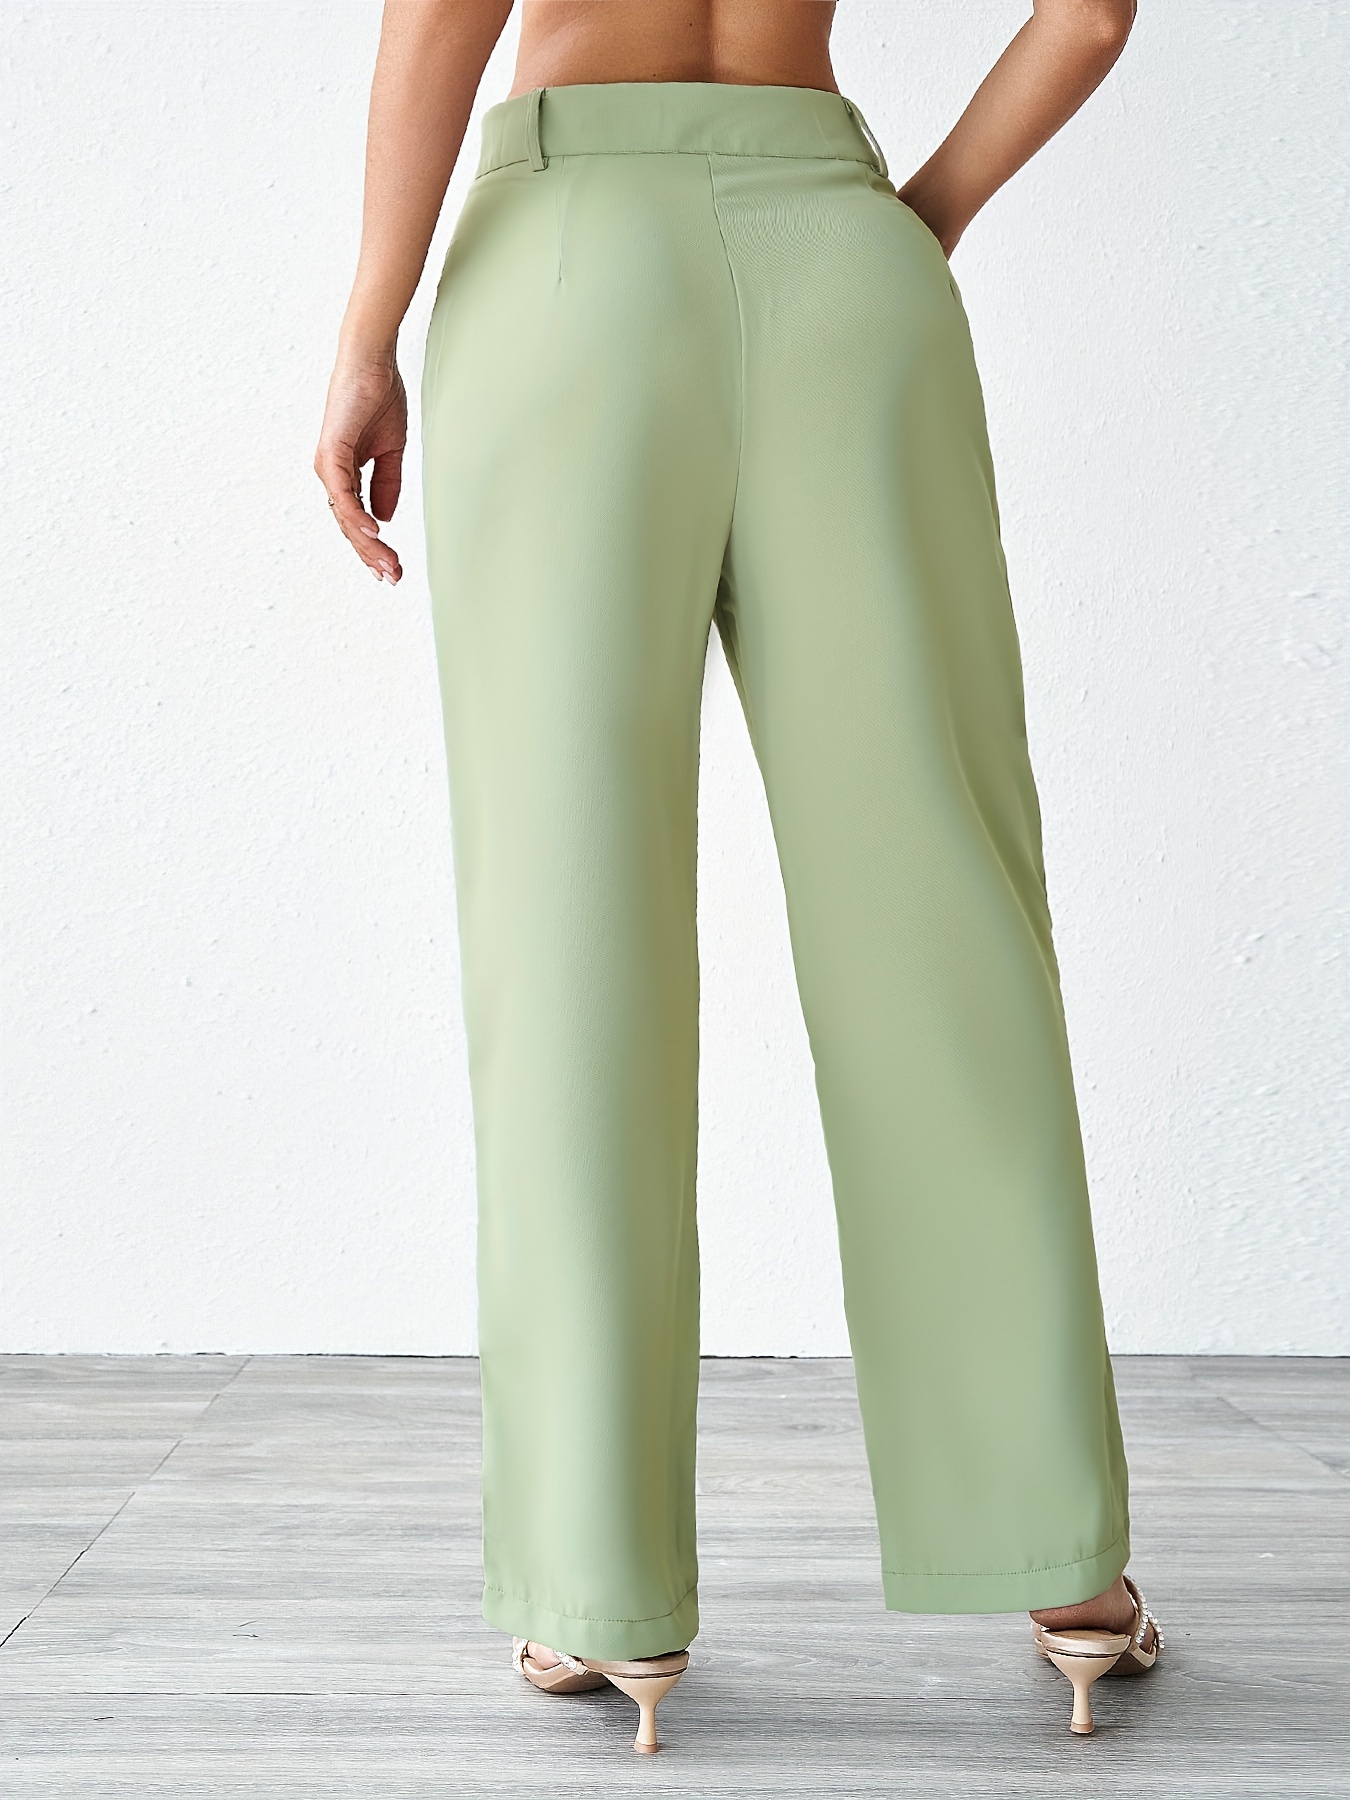 SHEIN Mint Green High Rise Tailored Wide Leg Pants Women's Size XS (2)